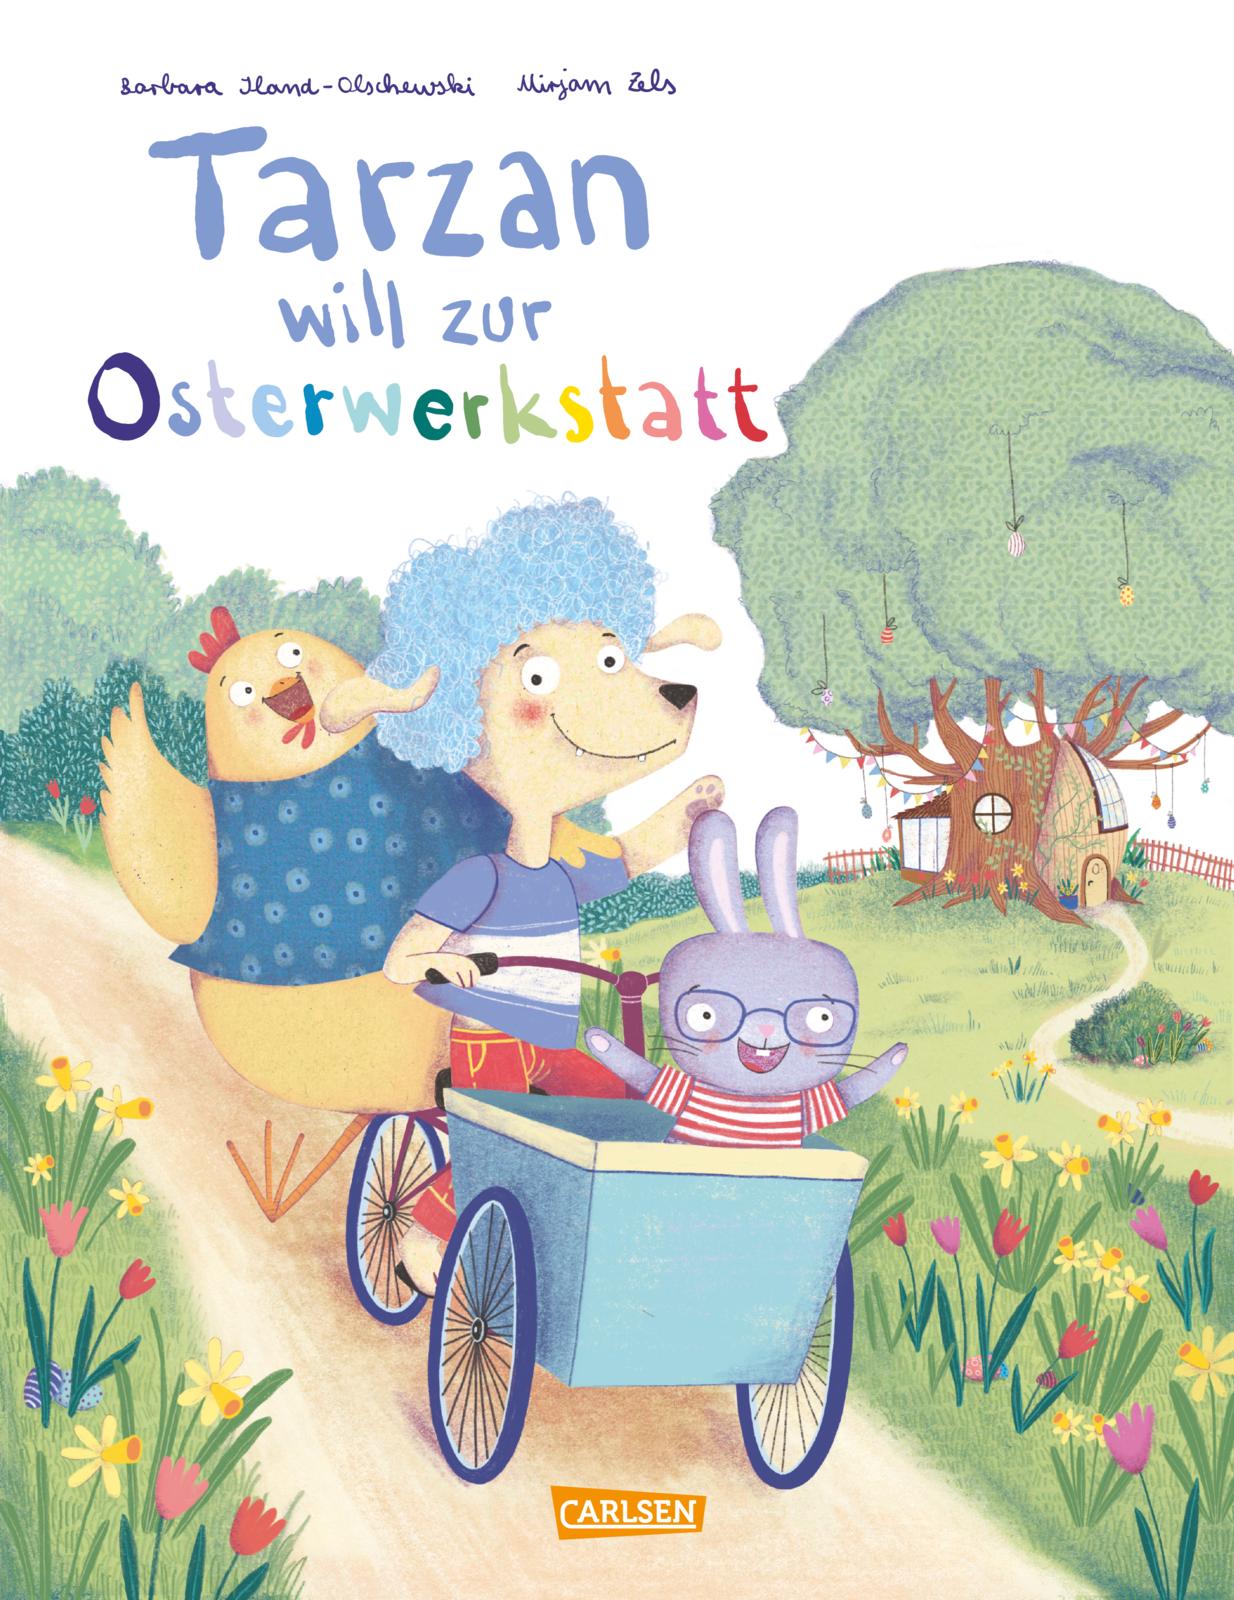 Buchcover "Tarzan will zur Osterwerkstatt", Carlsen 